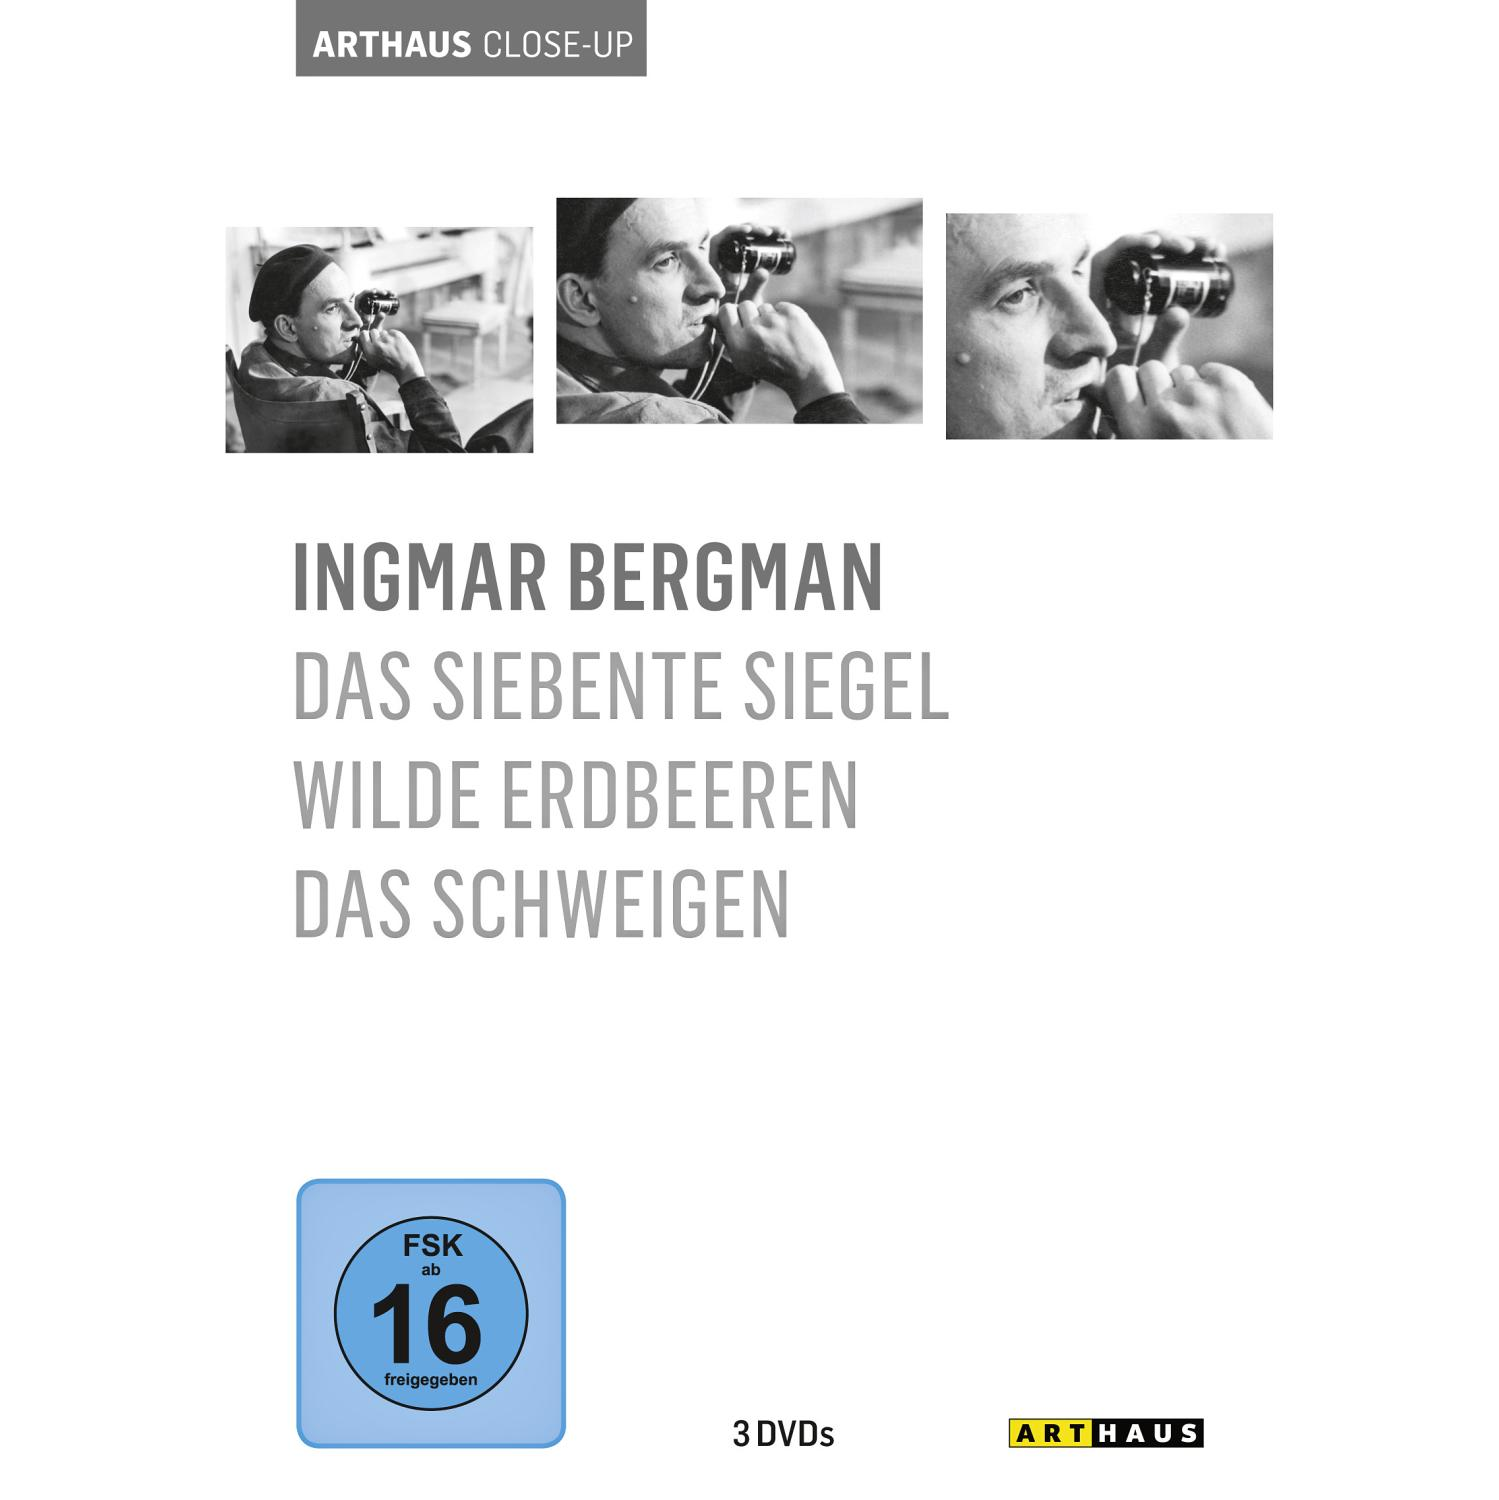 Ingmar Bergman - Arthaus Close-Up DVD